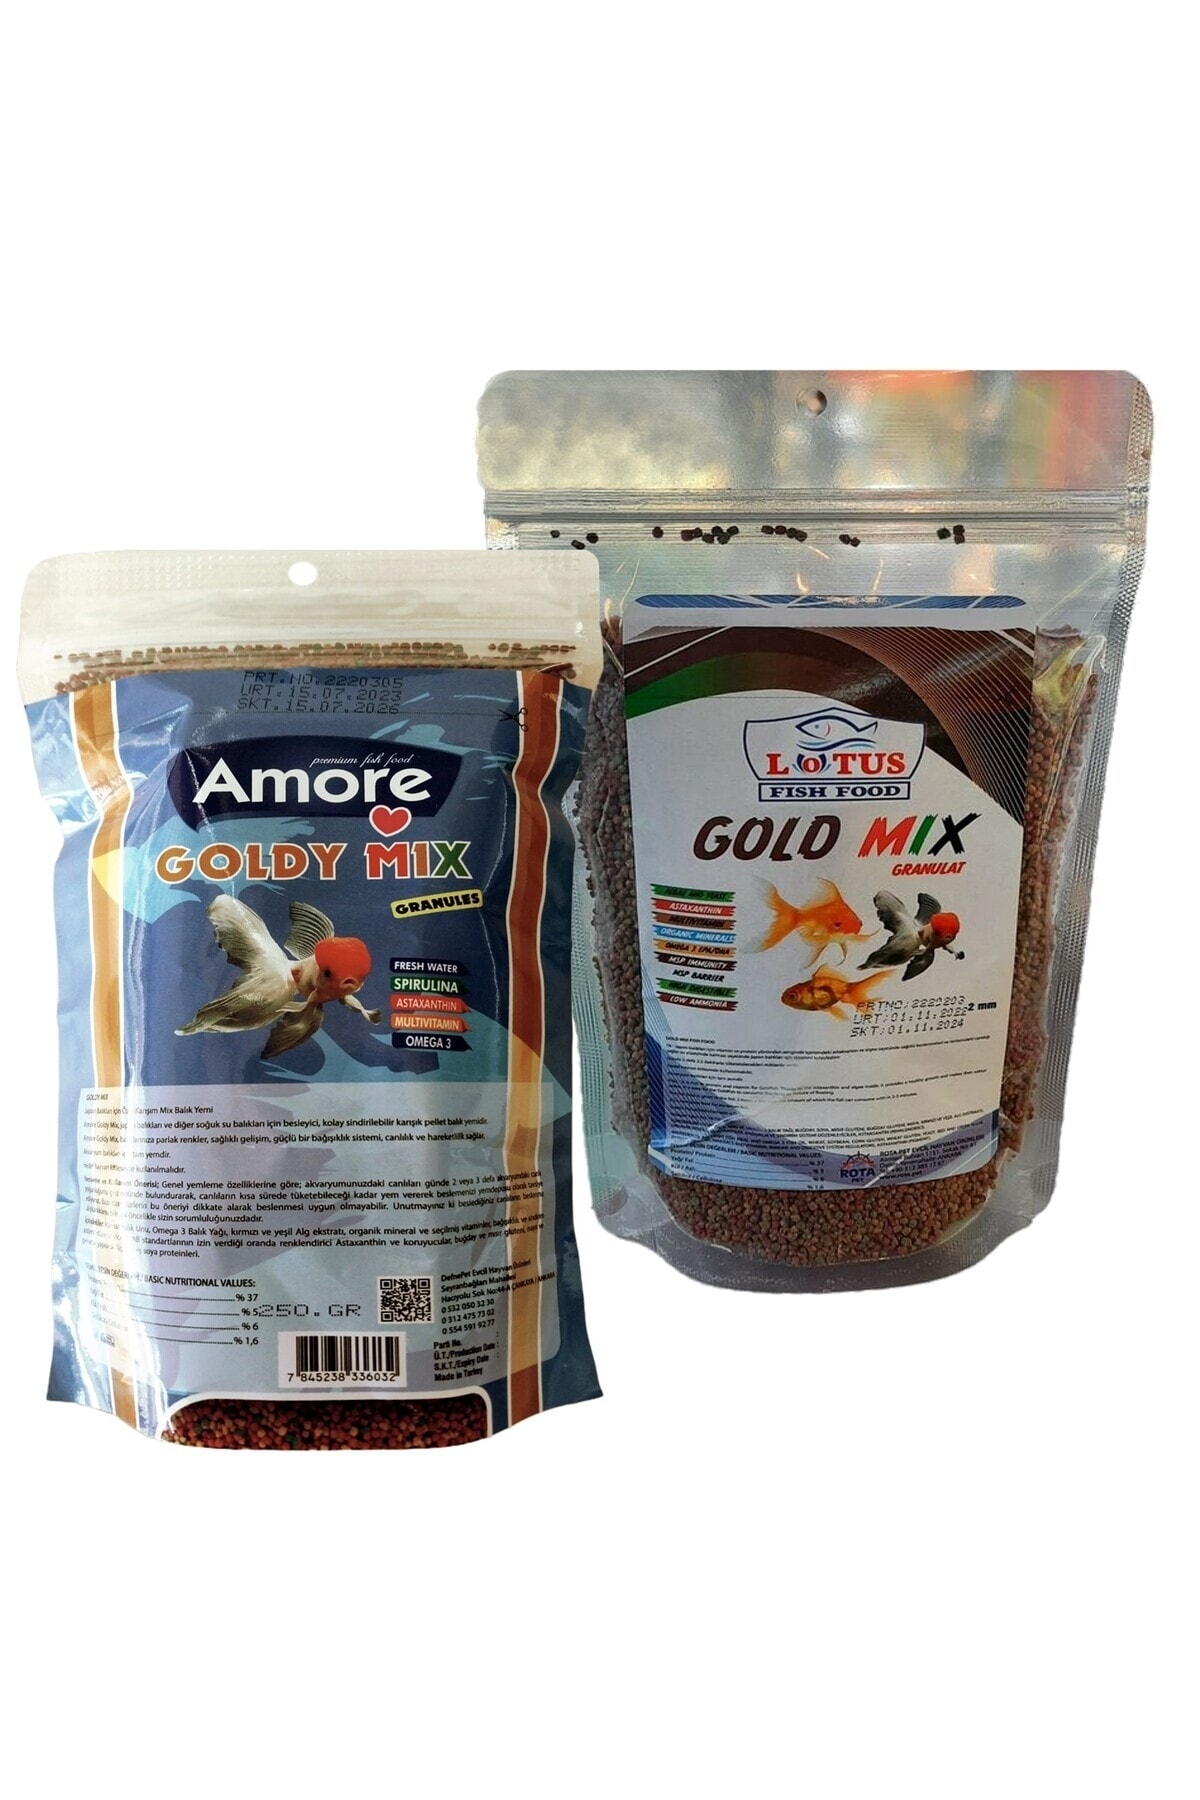 Amore Goldy Mix %37 Yuksek Protein 250 Gr Granul Japon Yemi Ve 250 Gr Lotus Gold Mix Zippack Poset